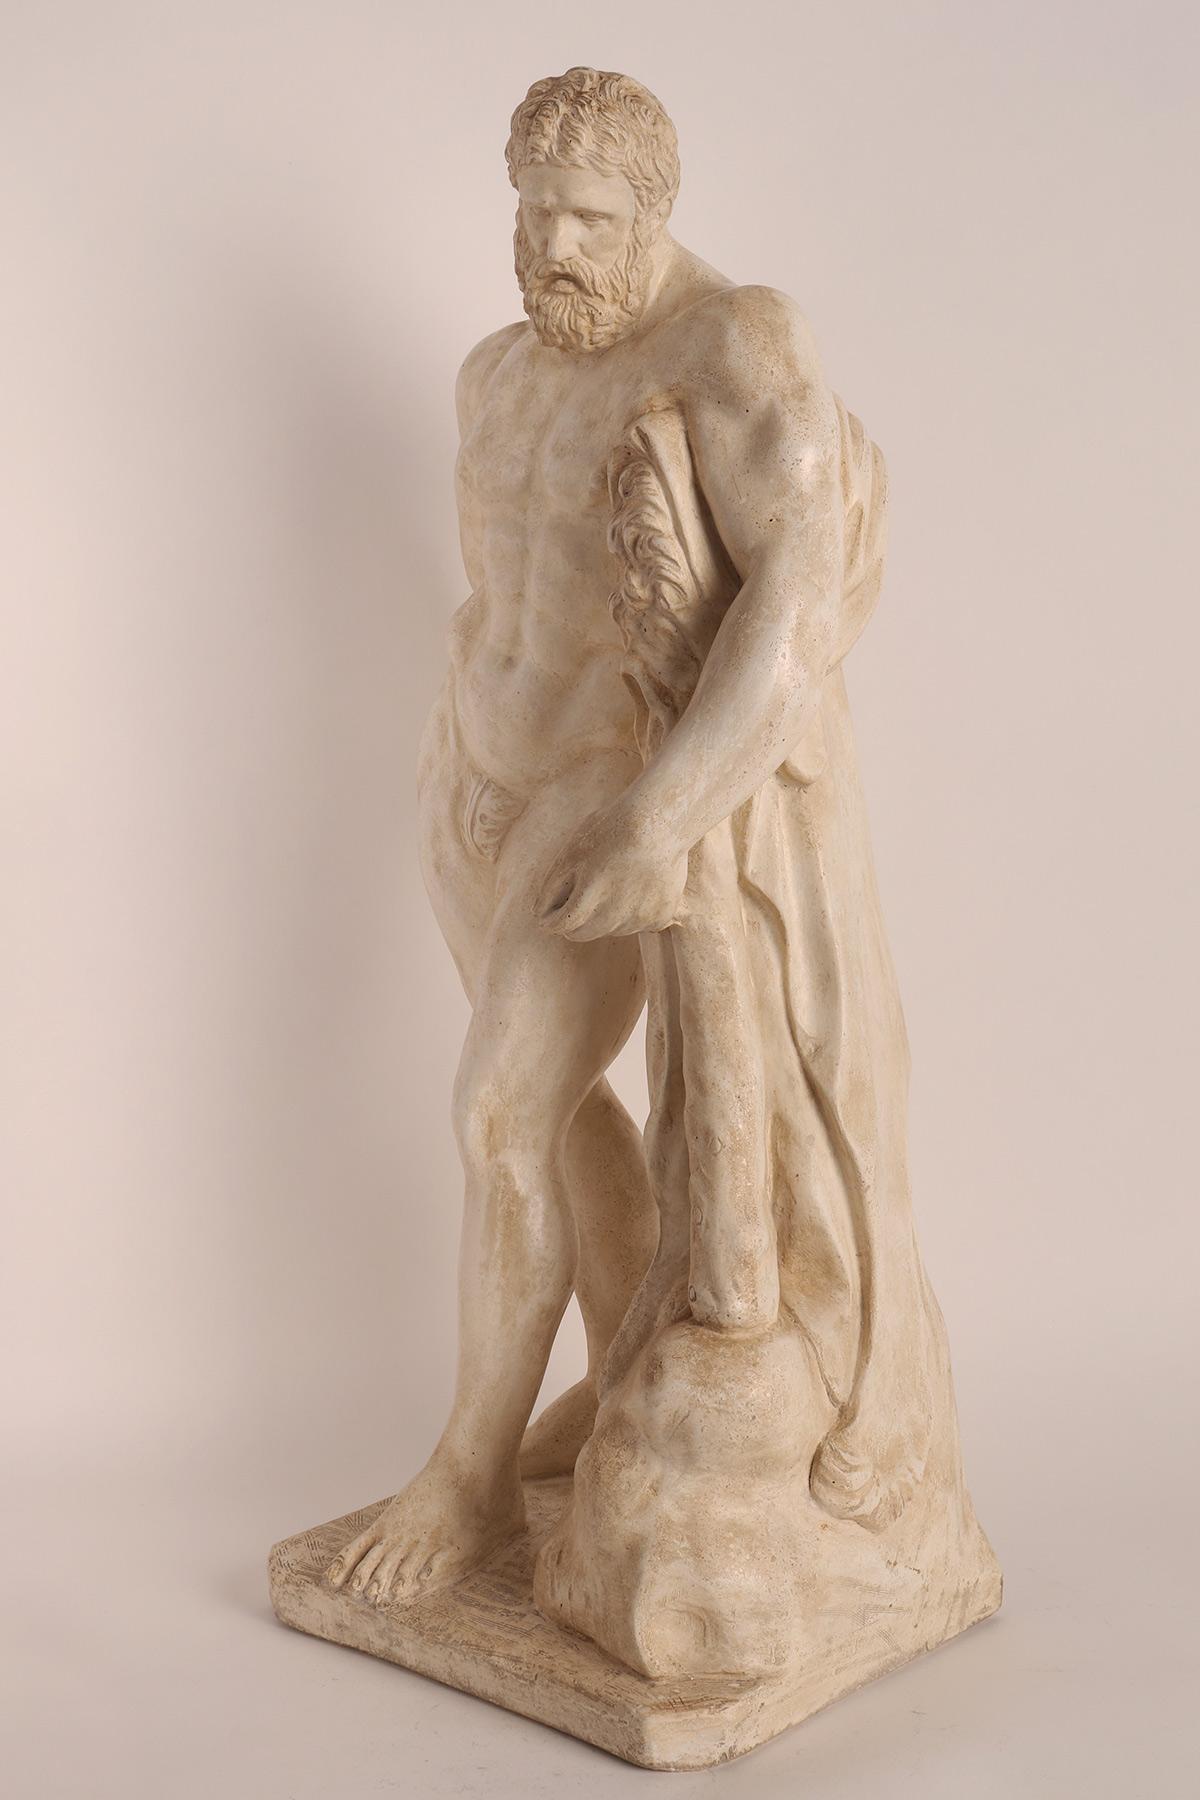 Italian Farnese Hercule, plaster, Grand Tour souvenir, Italy 1880. 